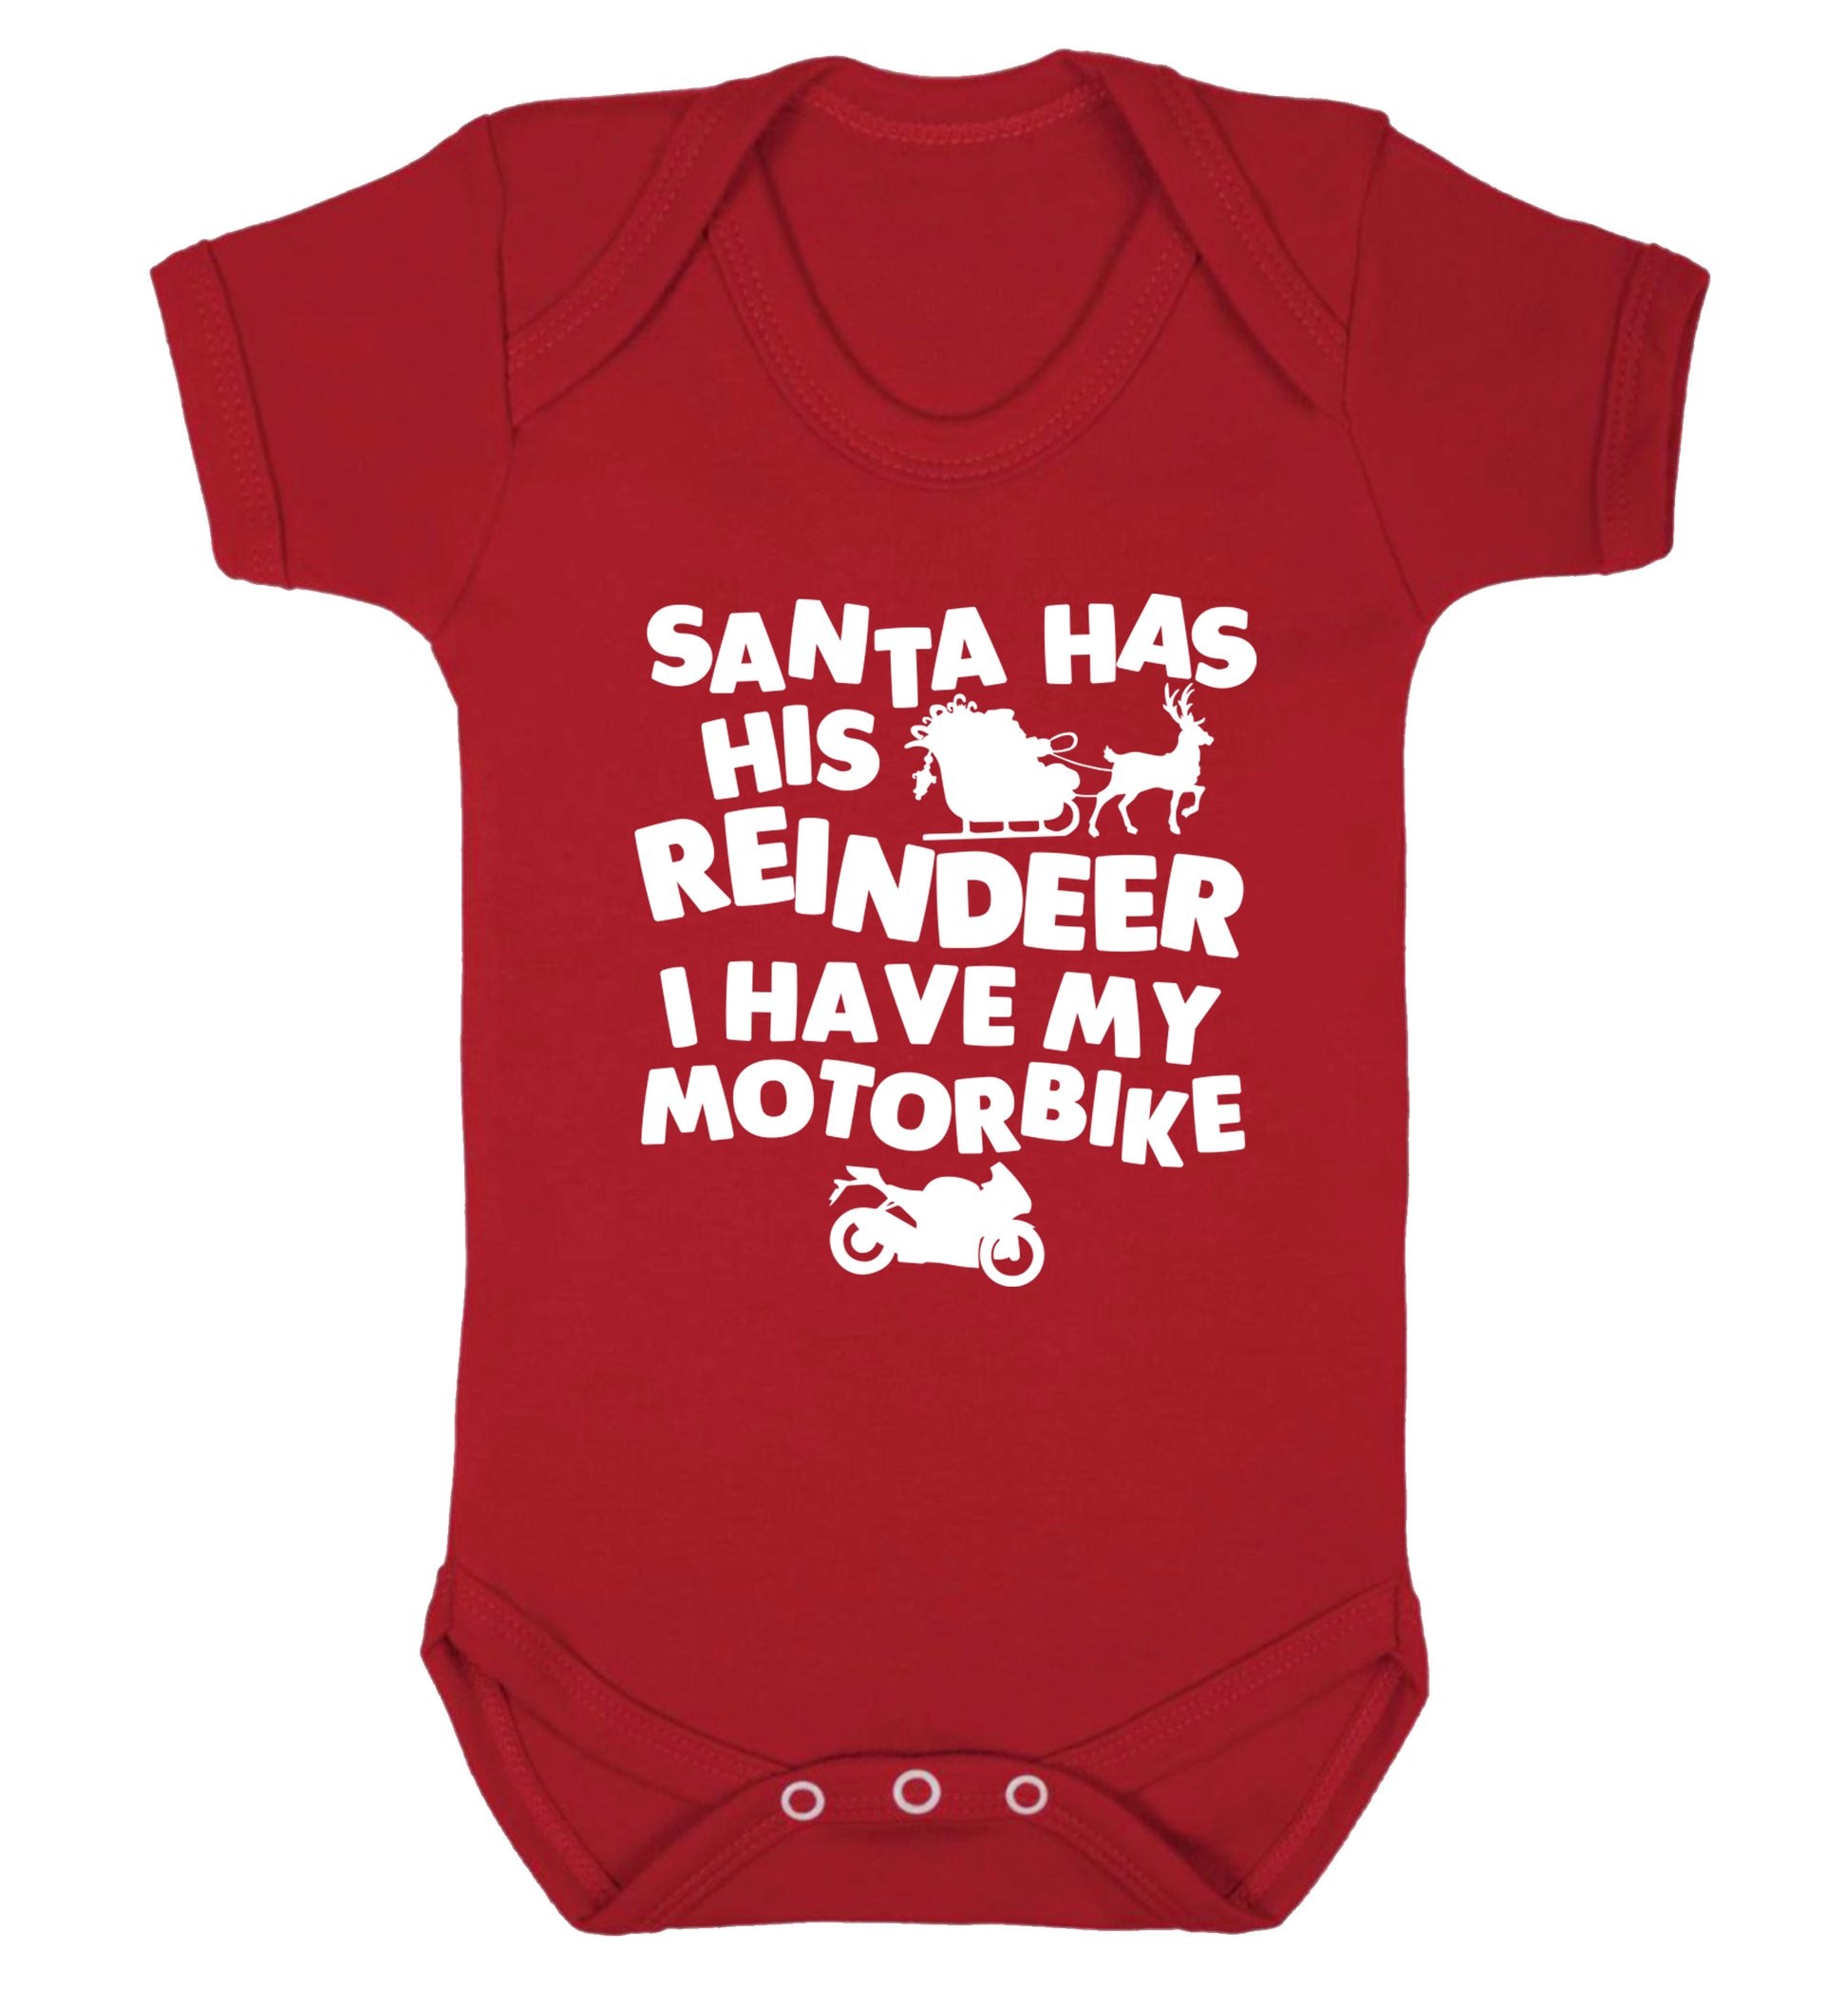 Santa has his reindeer I have my motorbike Baby Vest red 18-24 months